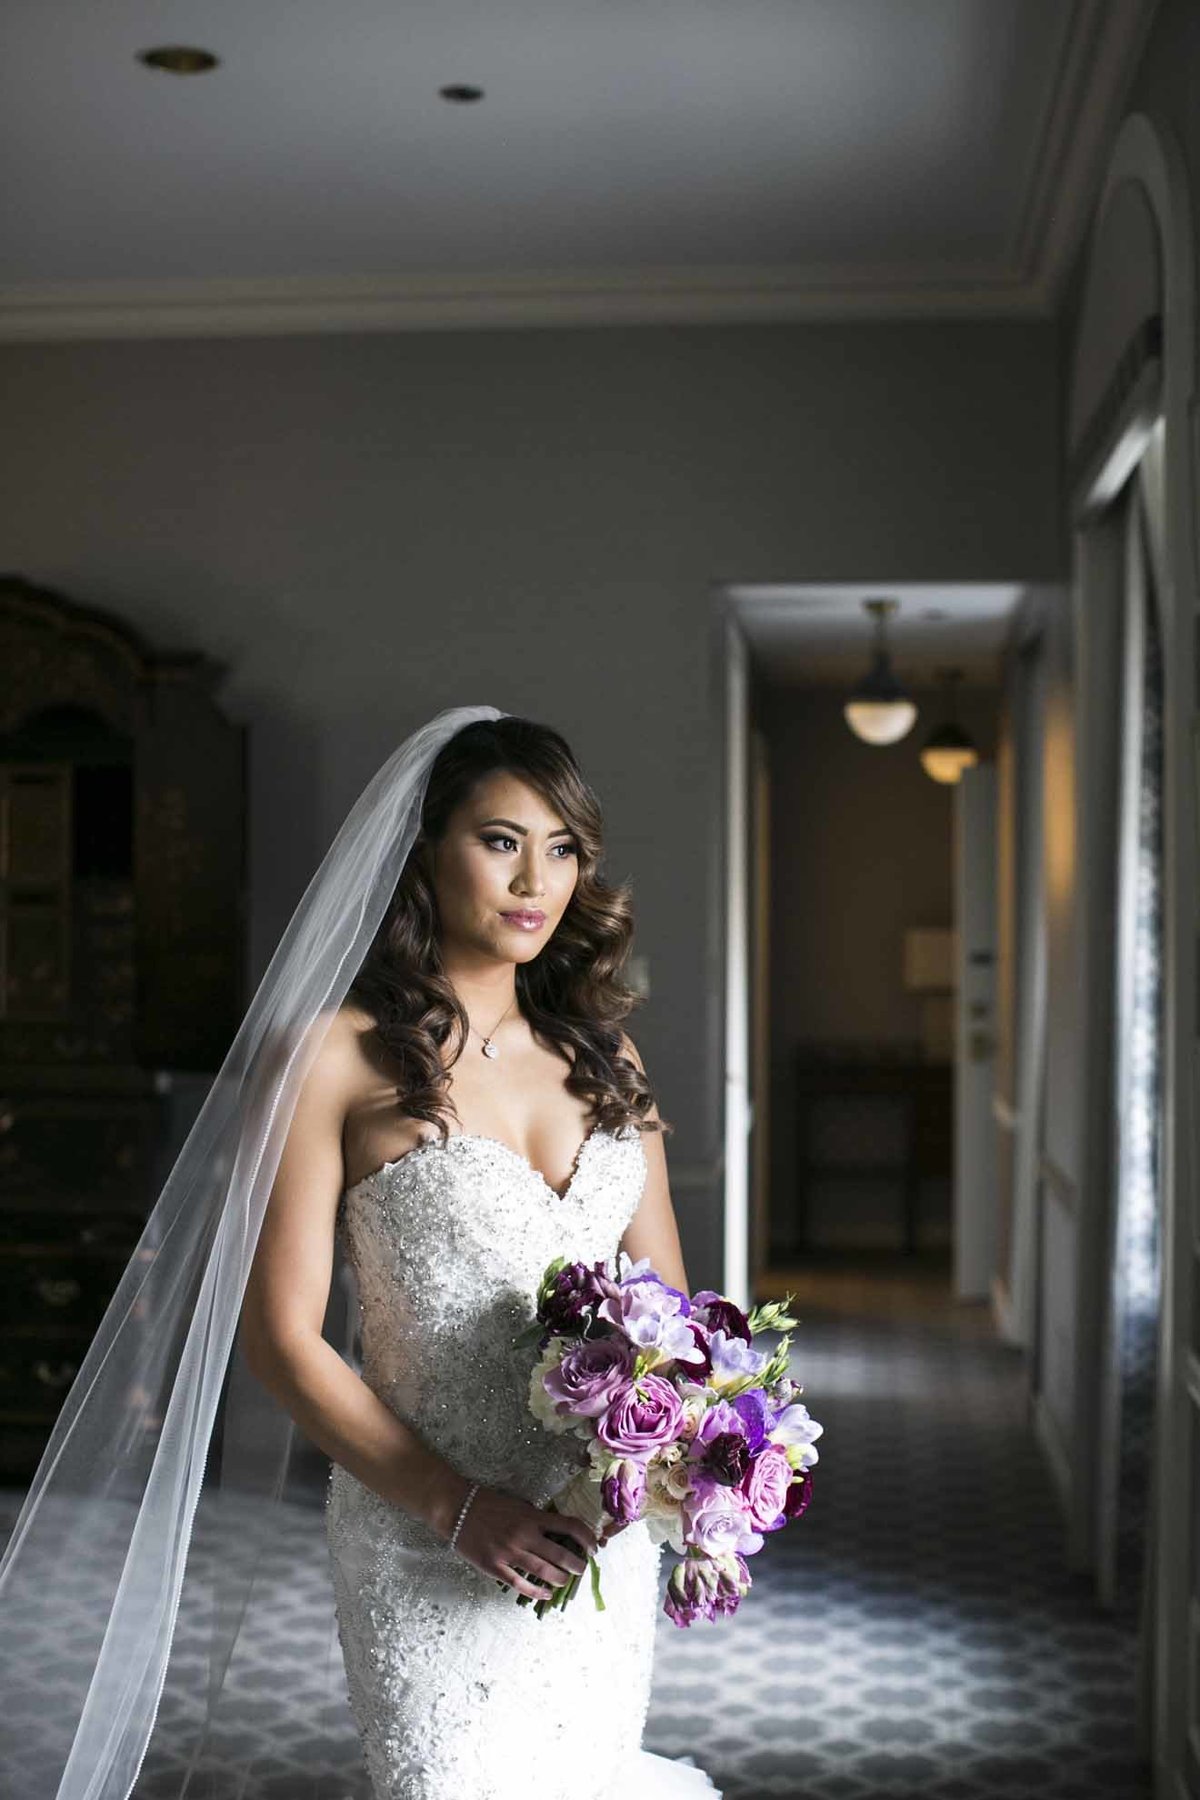 Our beautiful bride Mara holding a purple bridal bouquet.